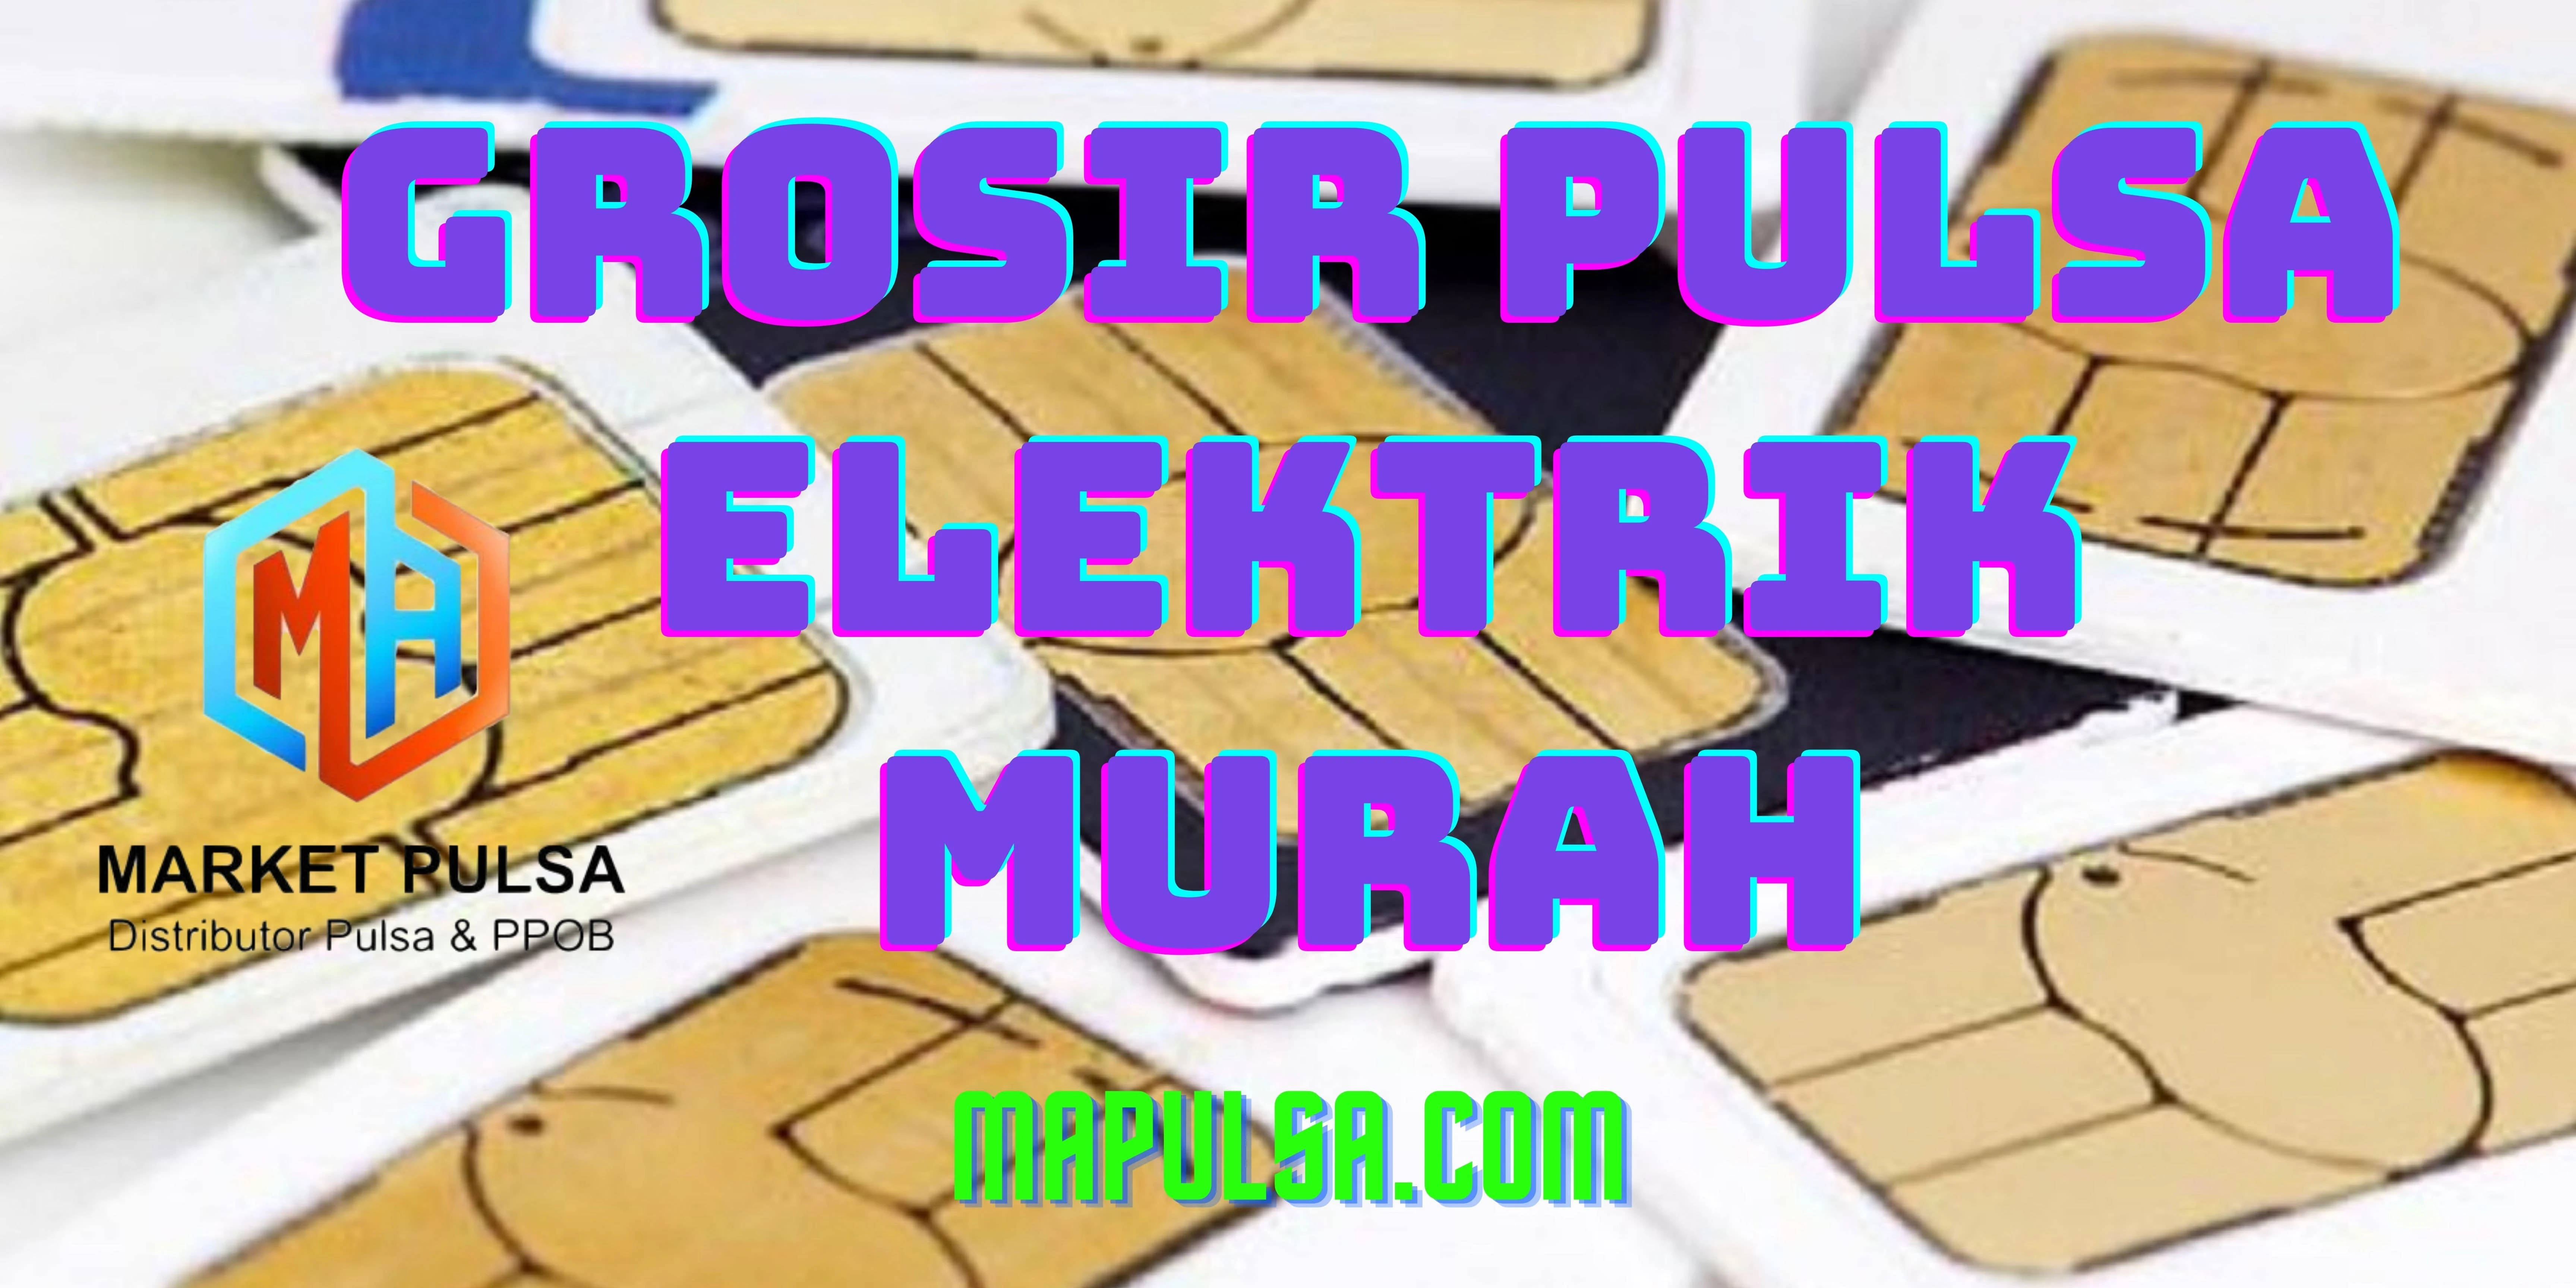 Grosir Pulsa Elektrik Murah Di Mamuju, Sulawesi Barat